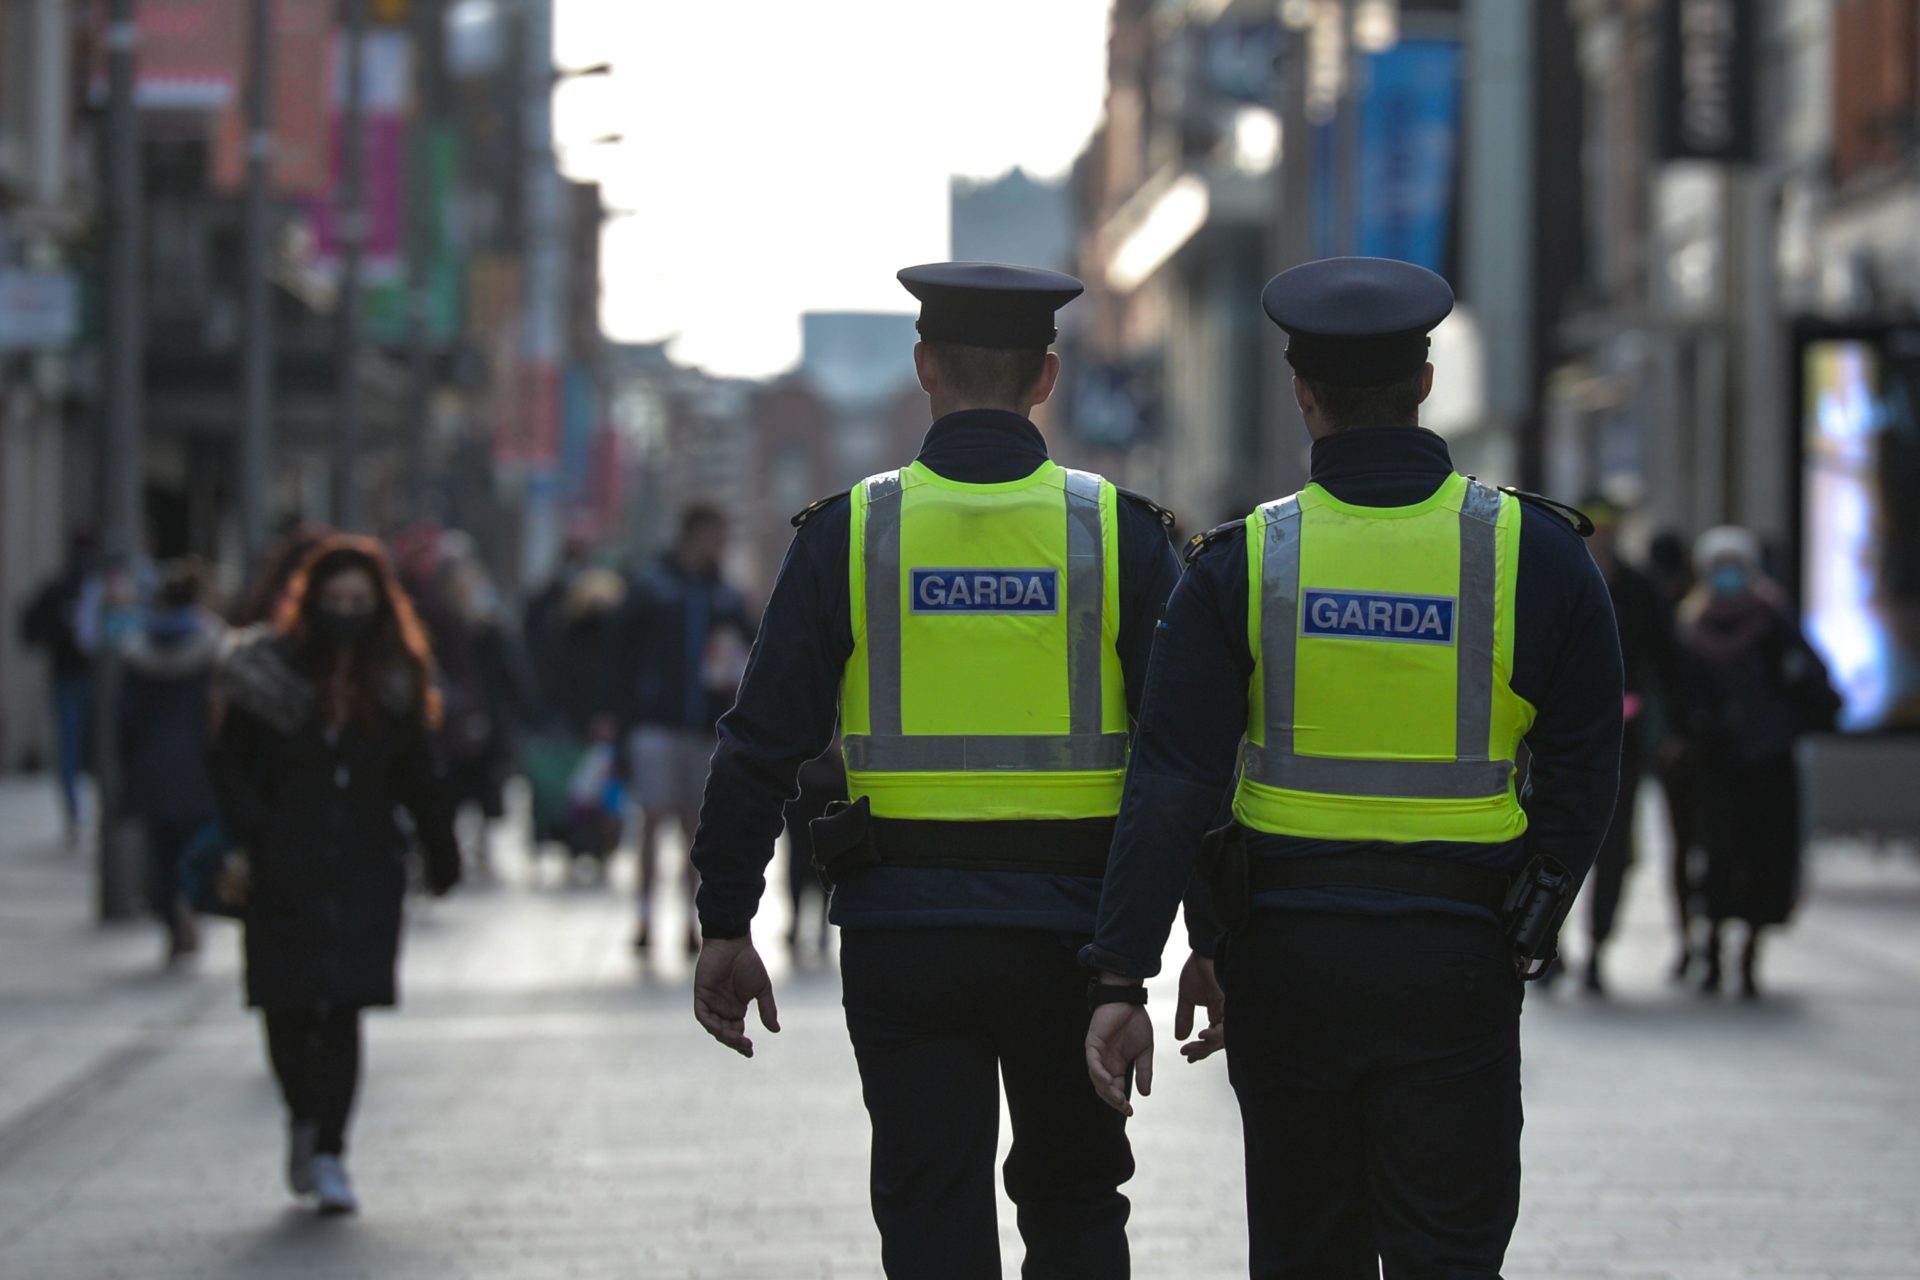 Gardaí on patrol in Dublin.